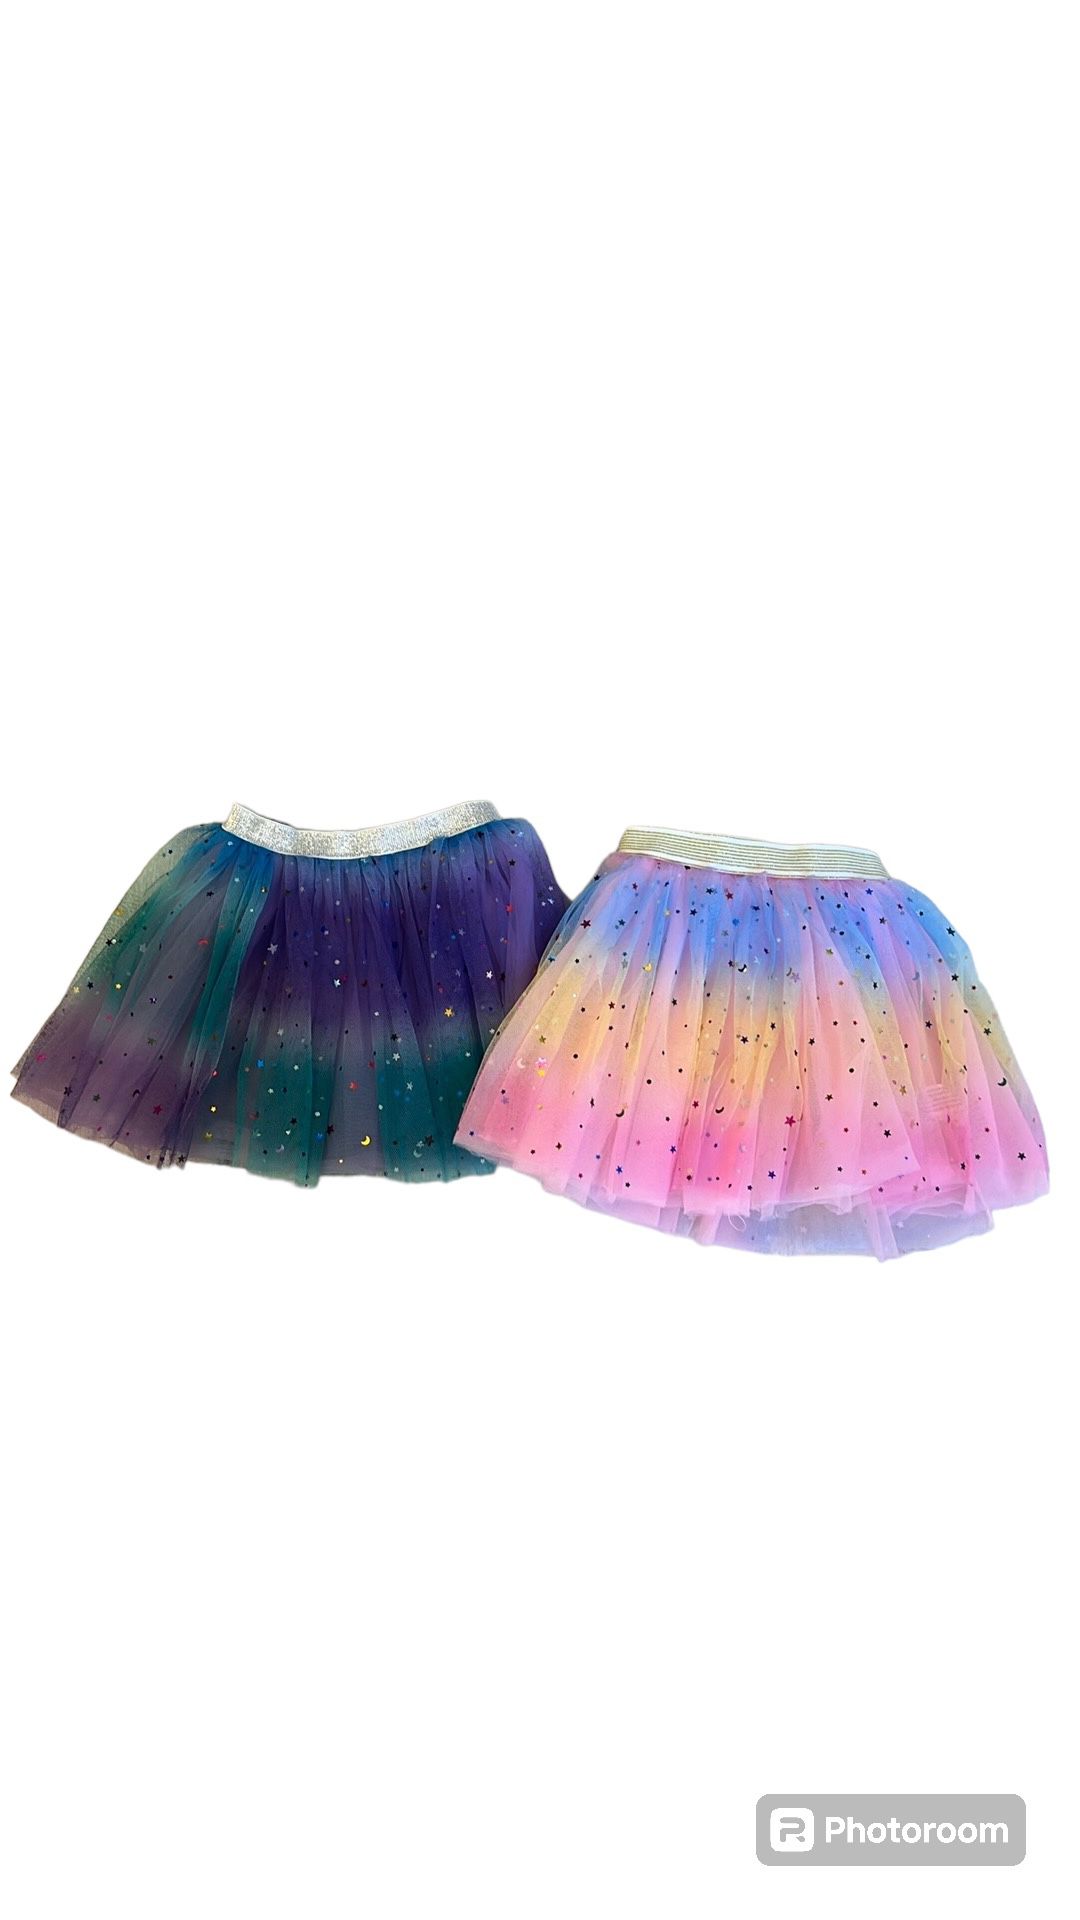 Girls Ombré Skirts Tutu Skirt Dance Performance Skirt